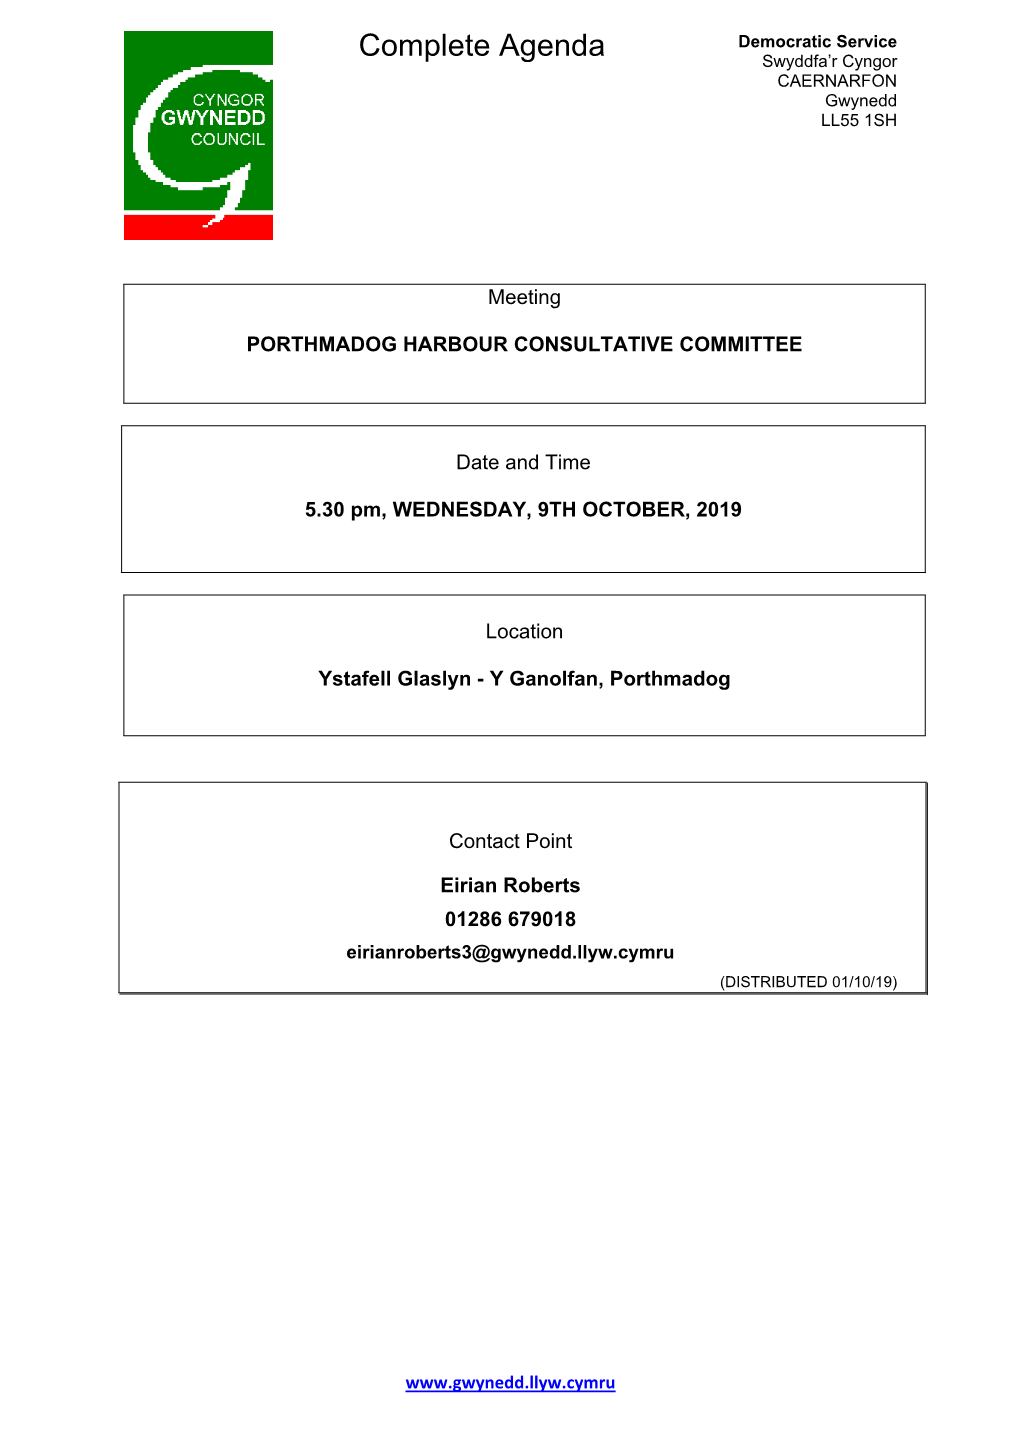 (Public Pack)Agenda Document for Porthmadog Harbour Consultative